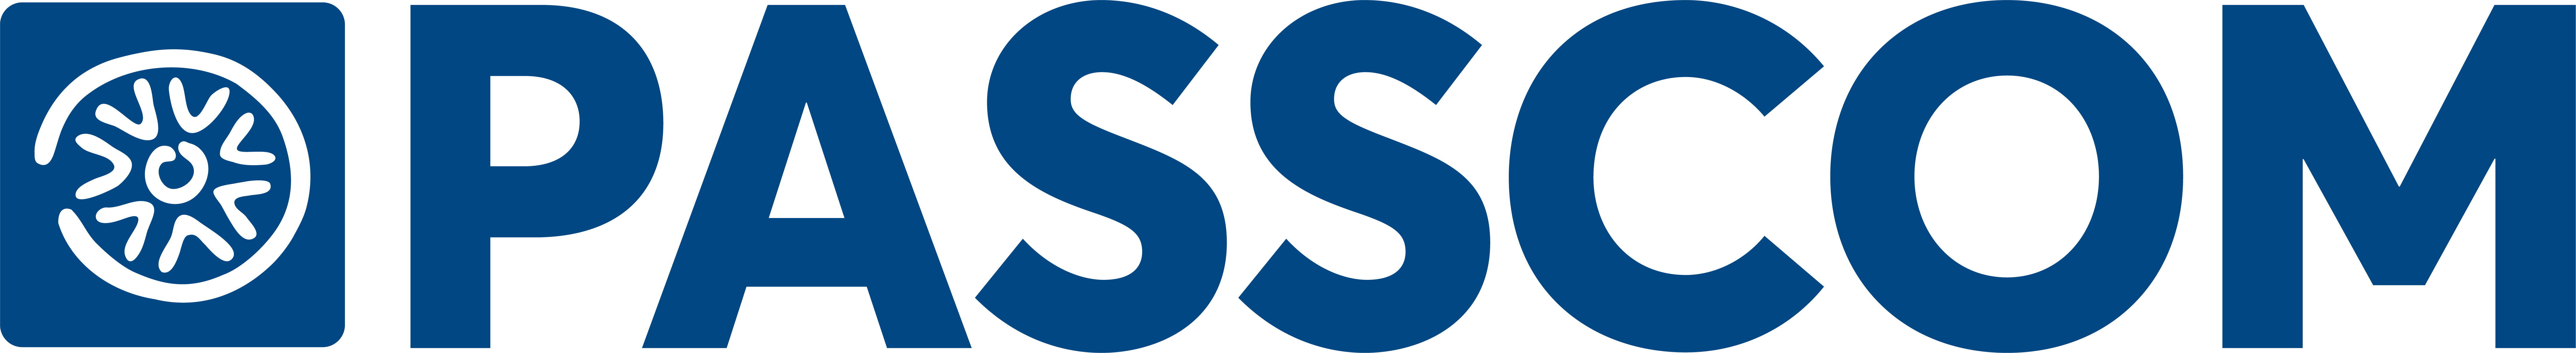 passcom logo